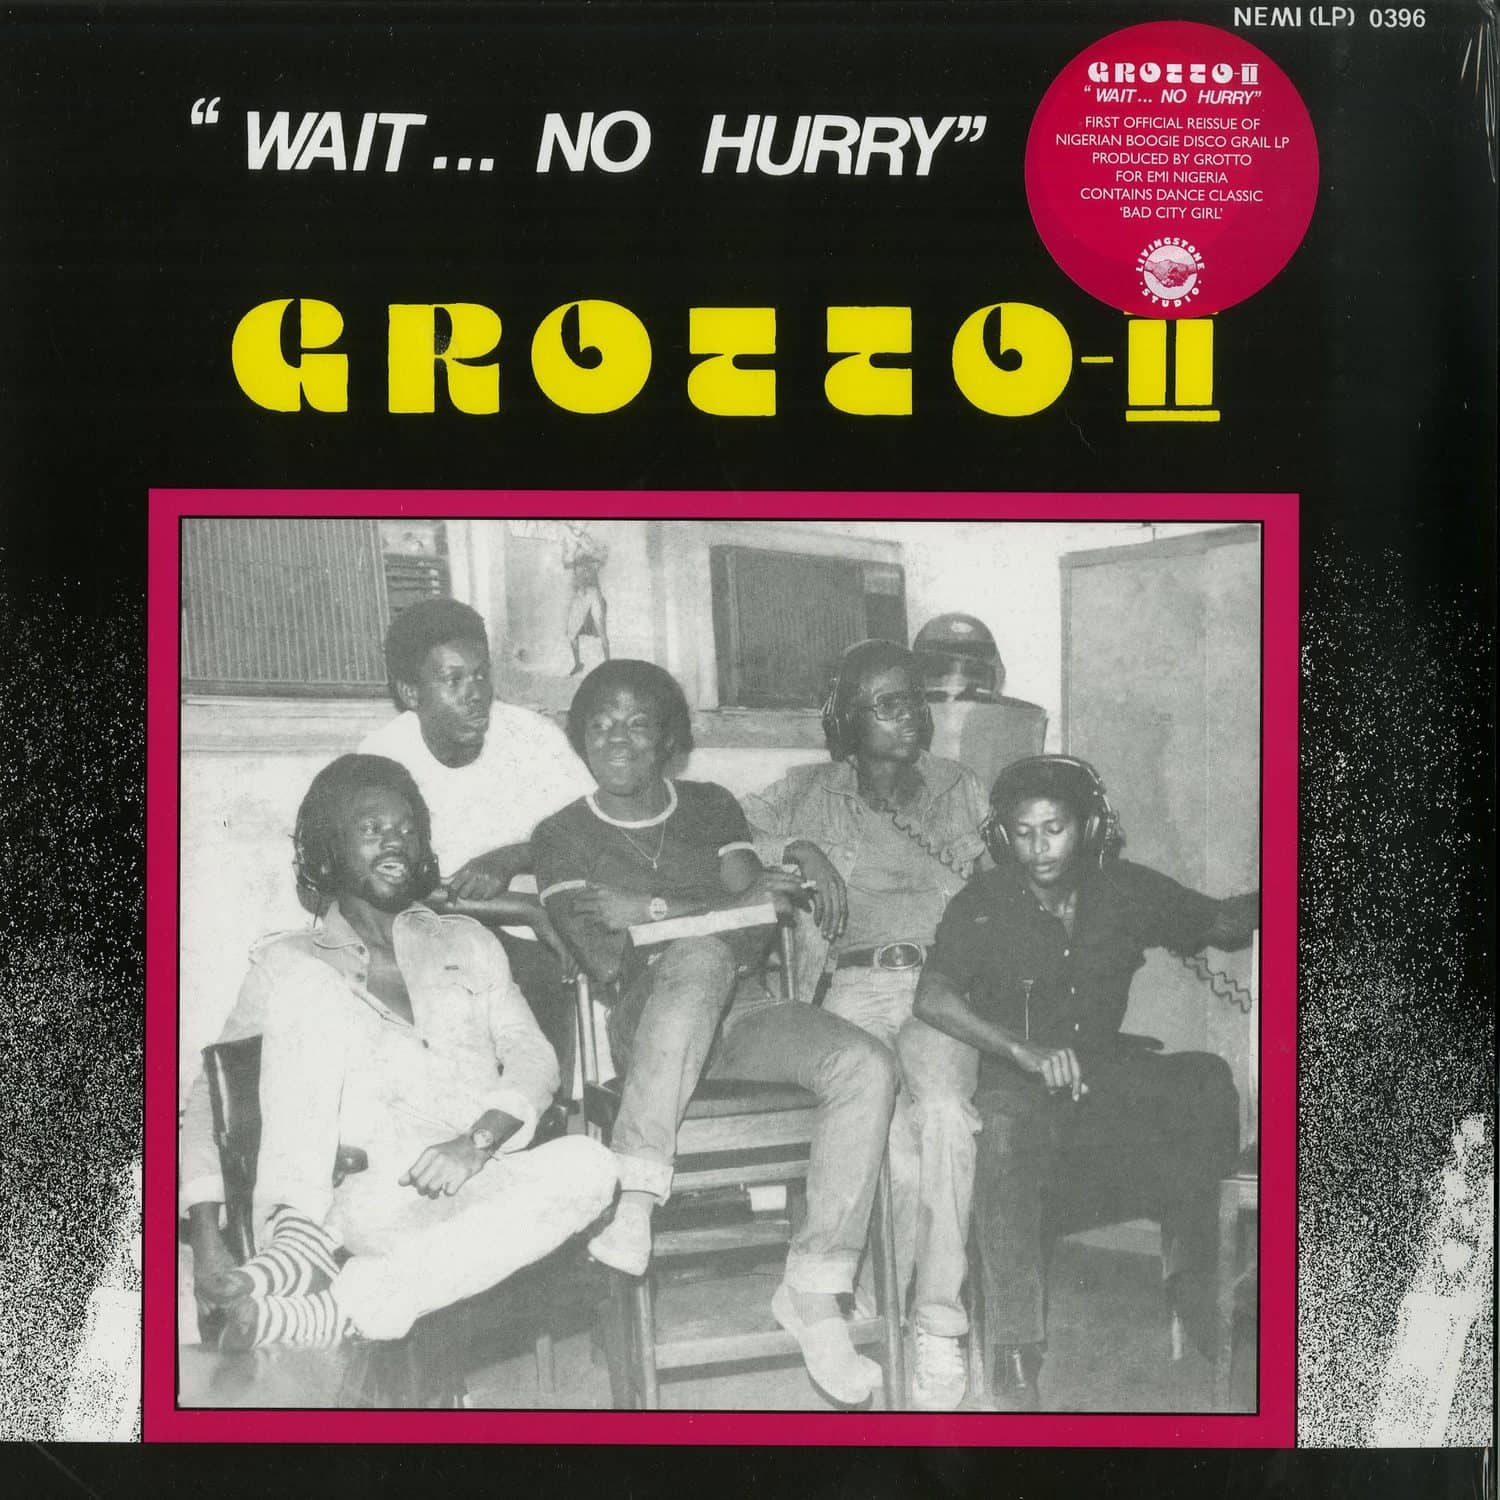 Grotto - WAIT...NO HURRY LP